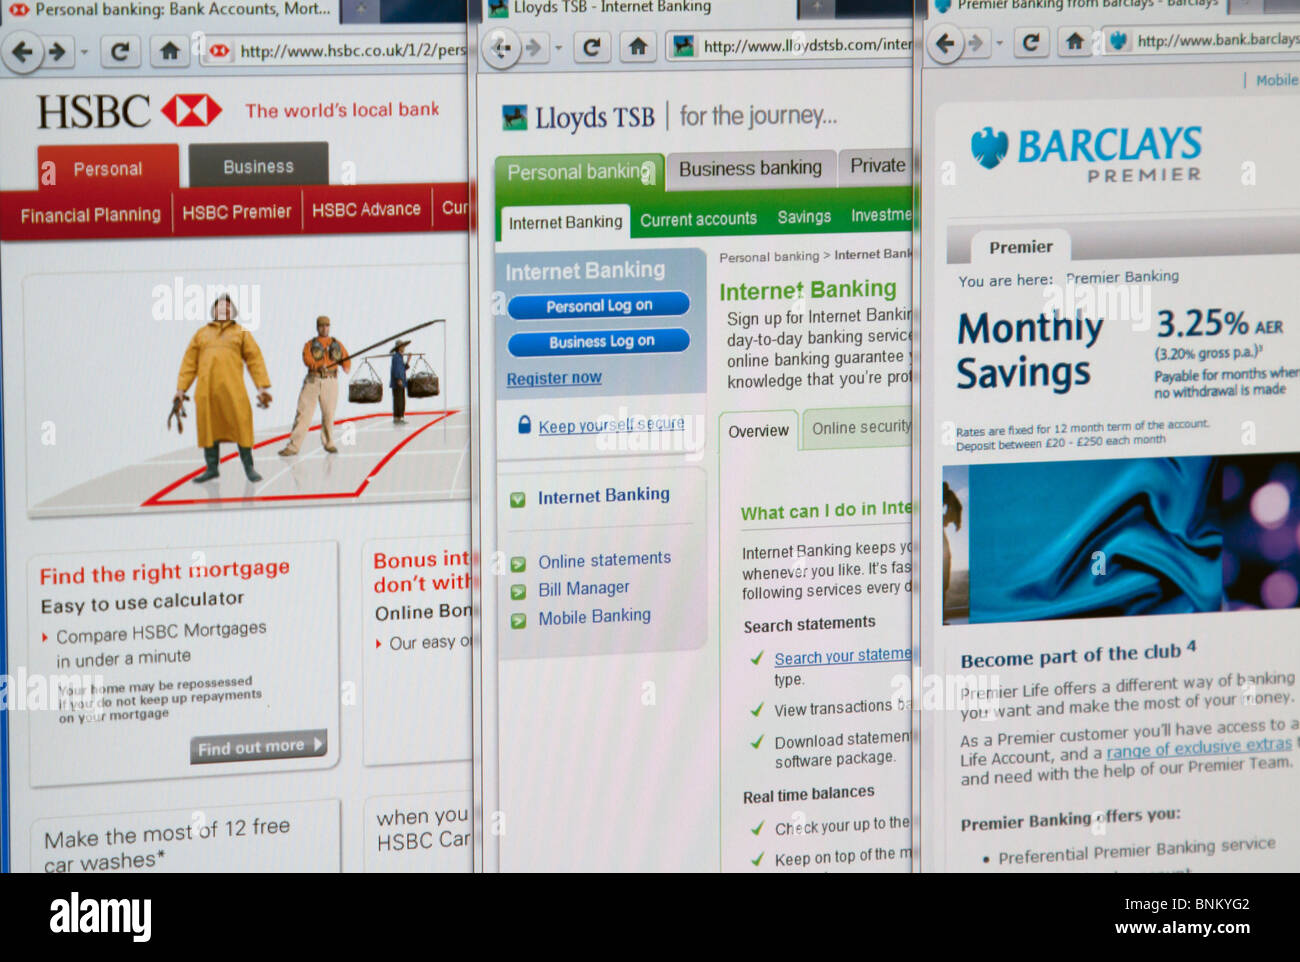 HSBC, Lloydstsb, Barclays siti web homepages. Foto Stock